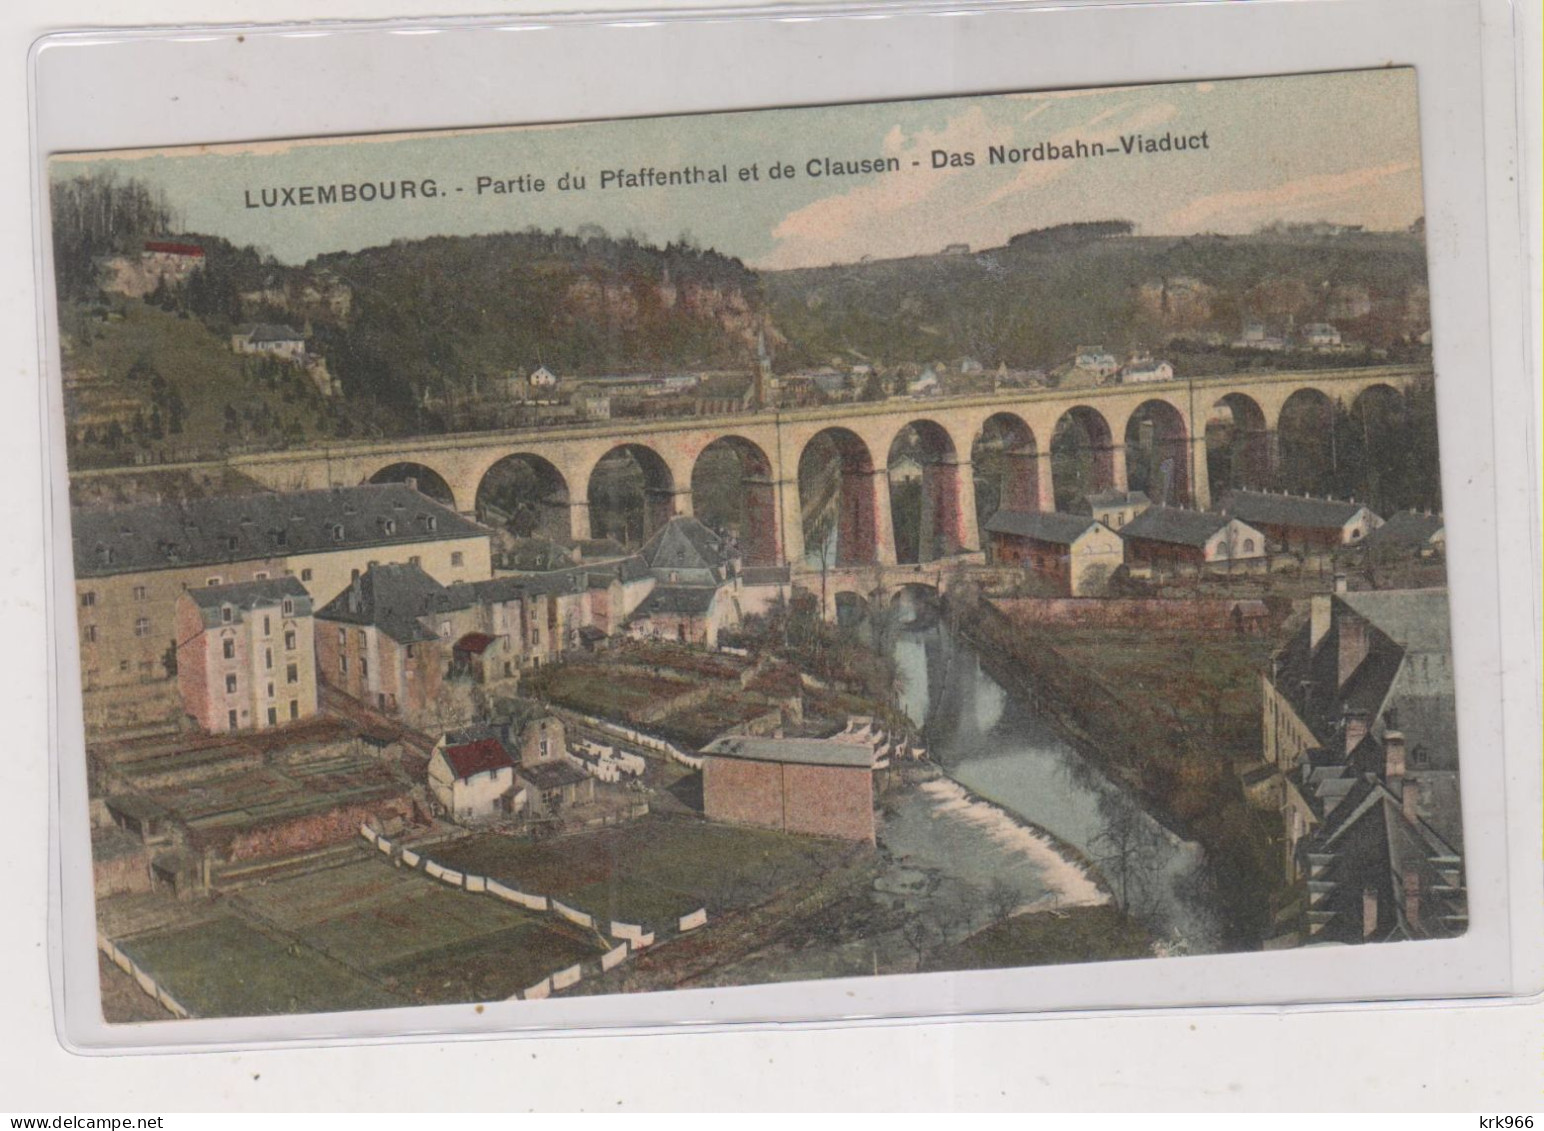 LUXEMBOURG  Nice Postcard - Luxemburg - Stadt